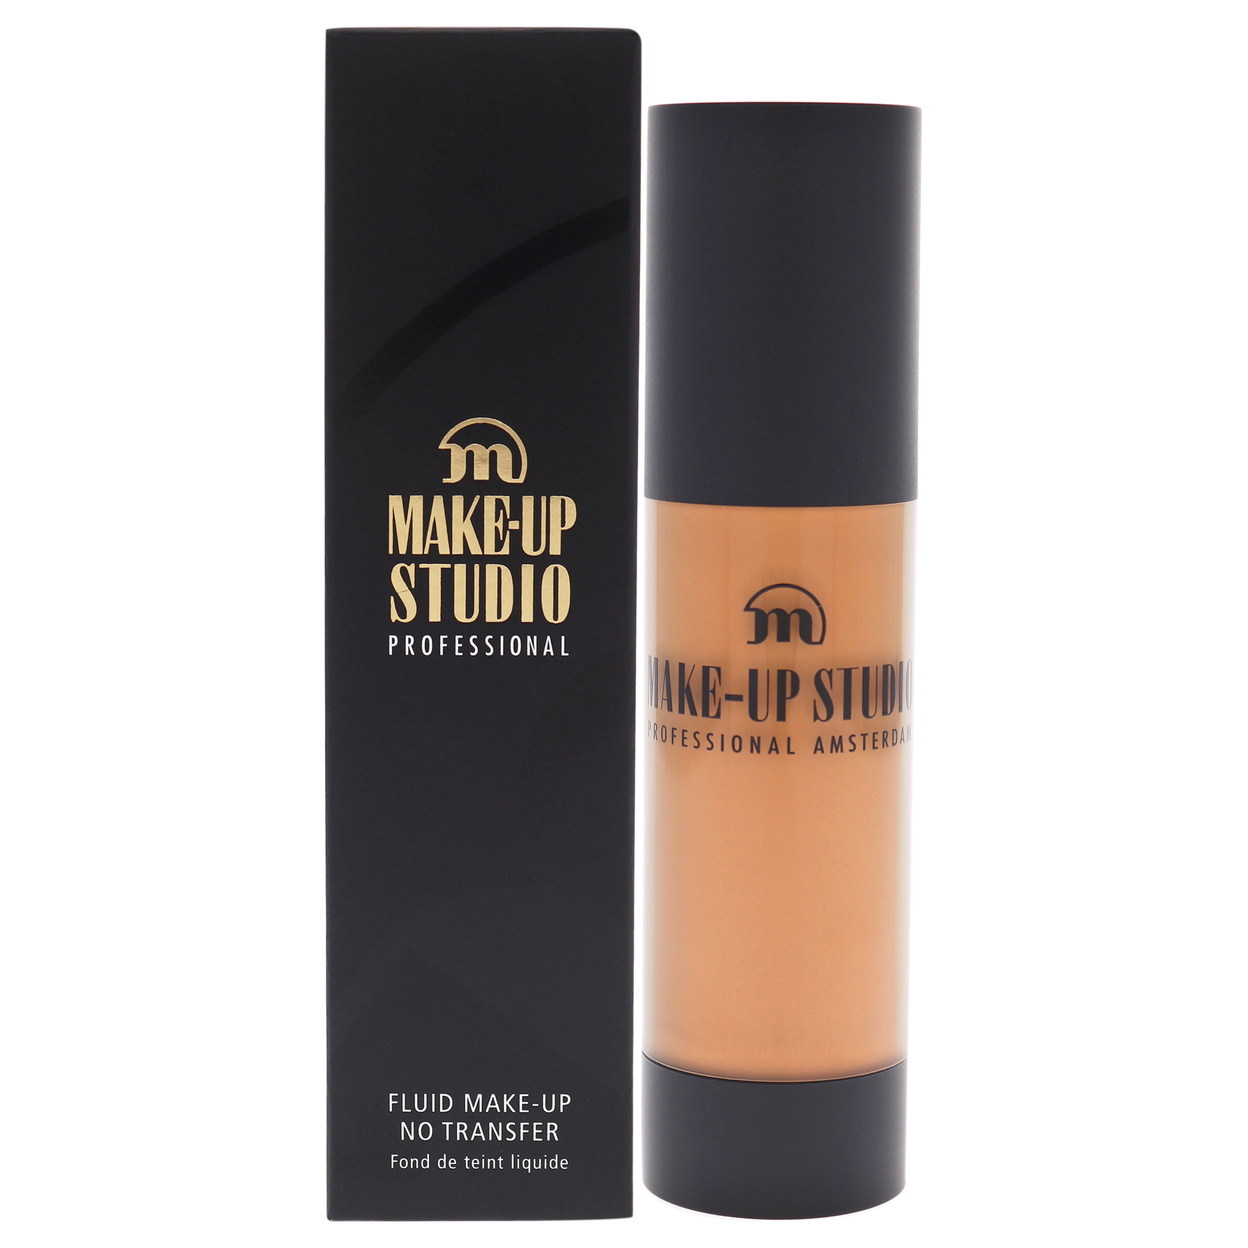 Make-Up Studio Fluid Foundation No Transfer - WB5 Olive Tan 1.18 Oz